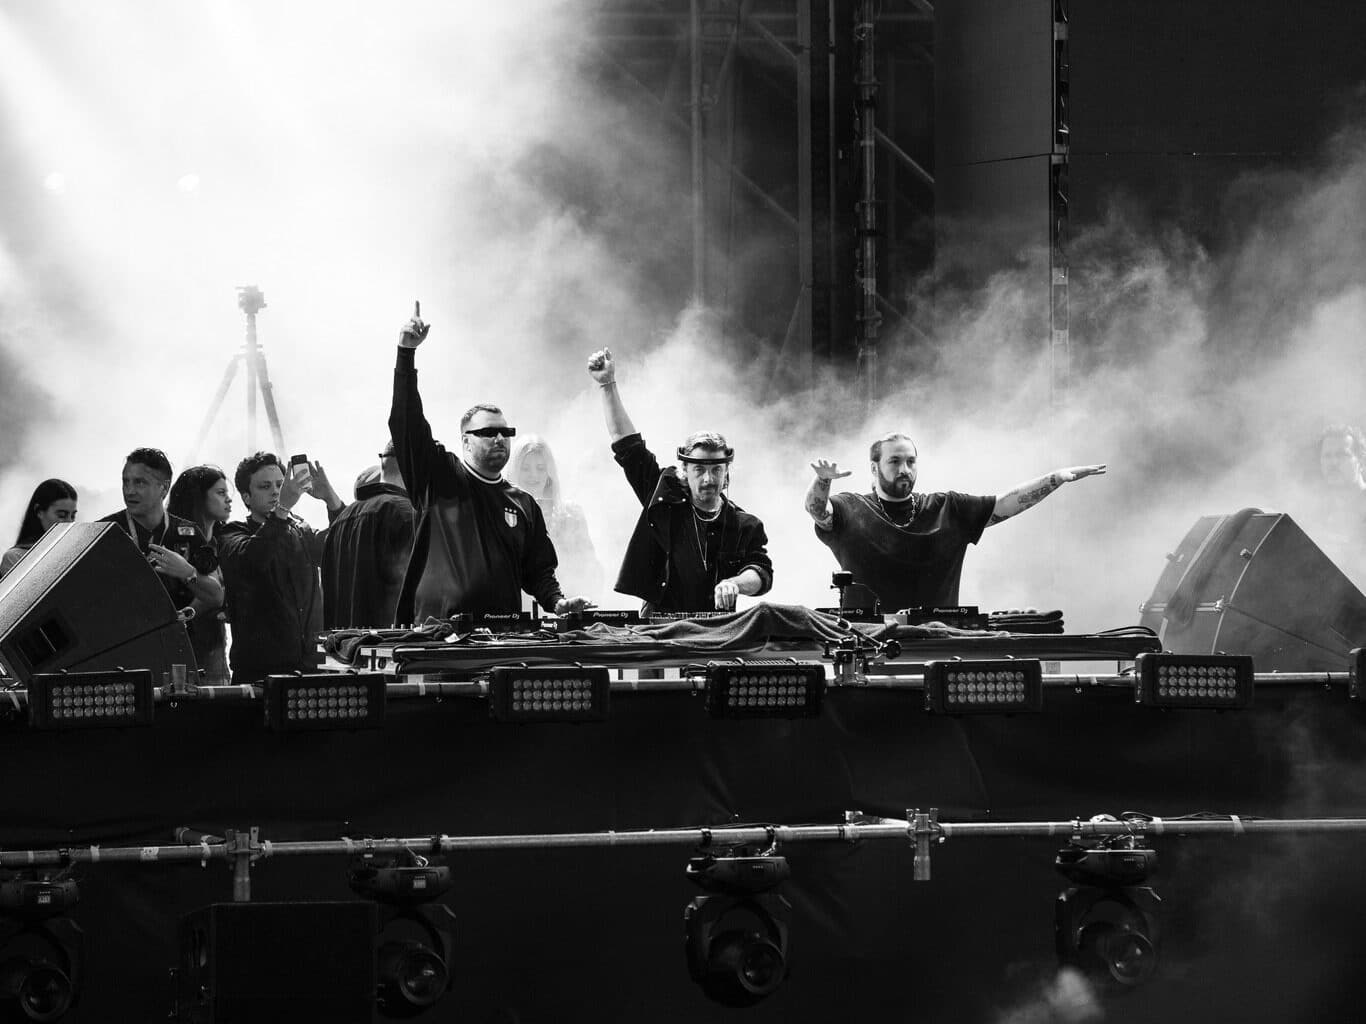 Finding 'Paradise Again' with Swedish House Mafia